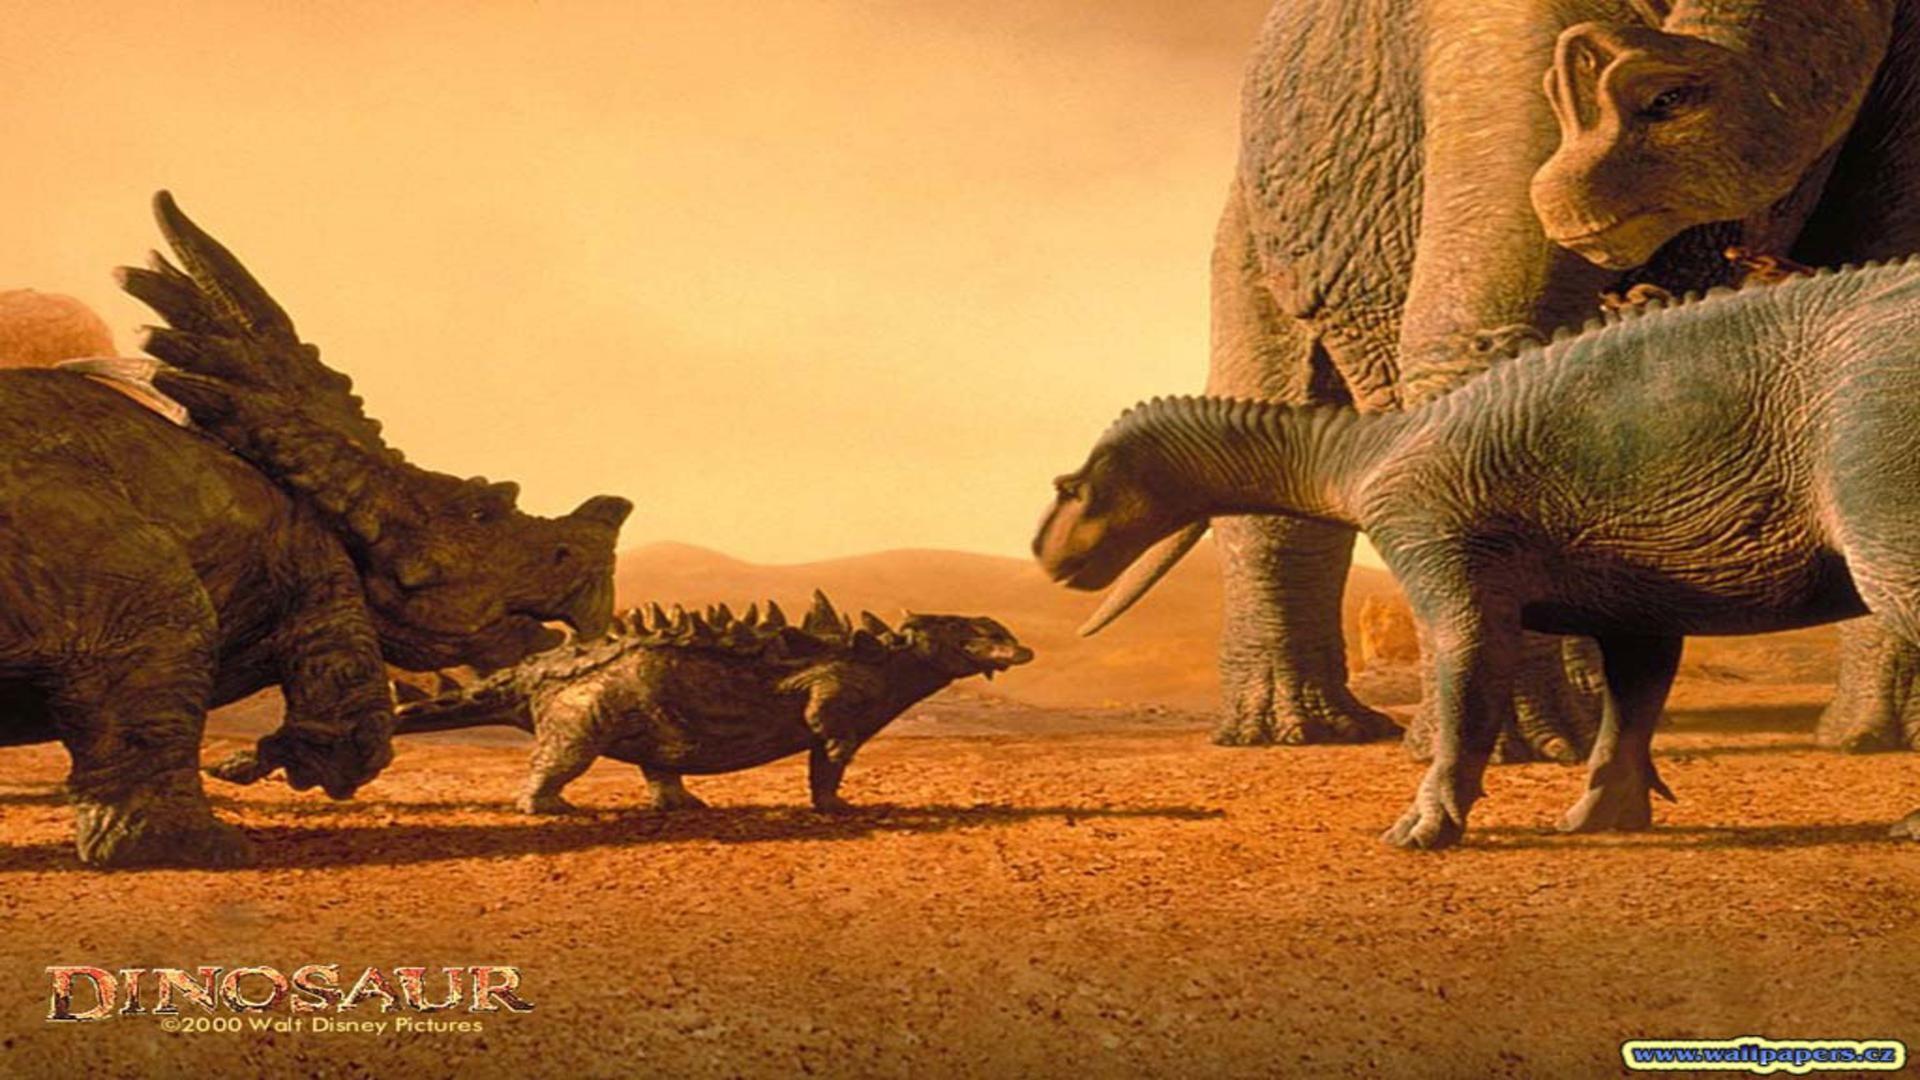 Dinosaur wallpaper scenic free desktop background wallpaper